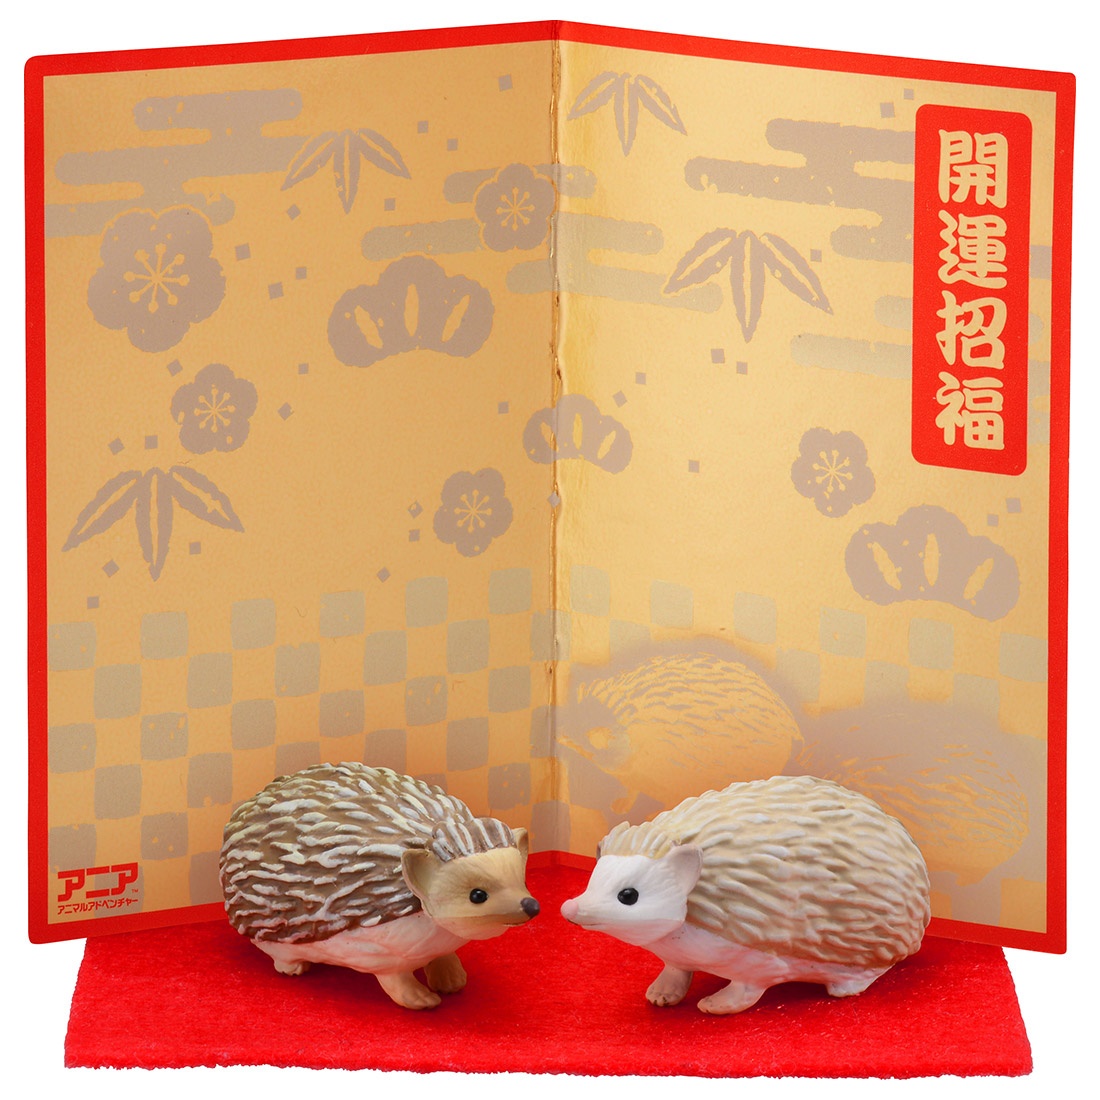 Takara Tomy ANIA Animal Oriental Zodiac Hedgehog Action Mini Figure Toy Japan 